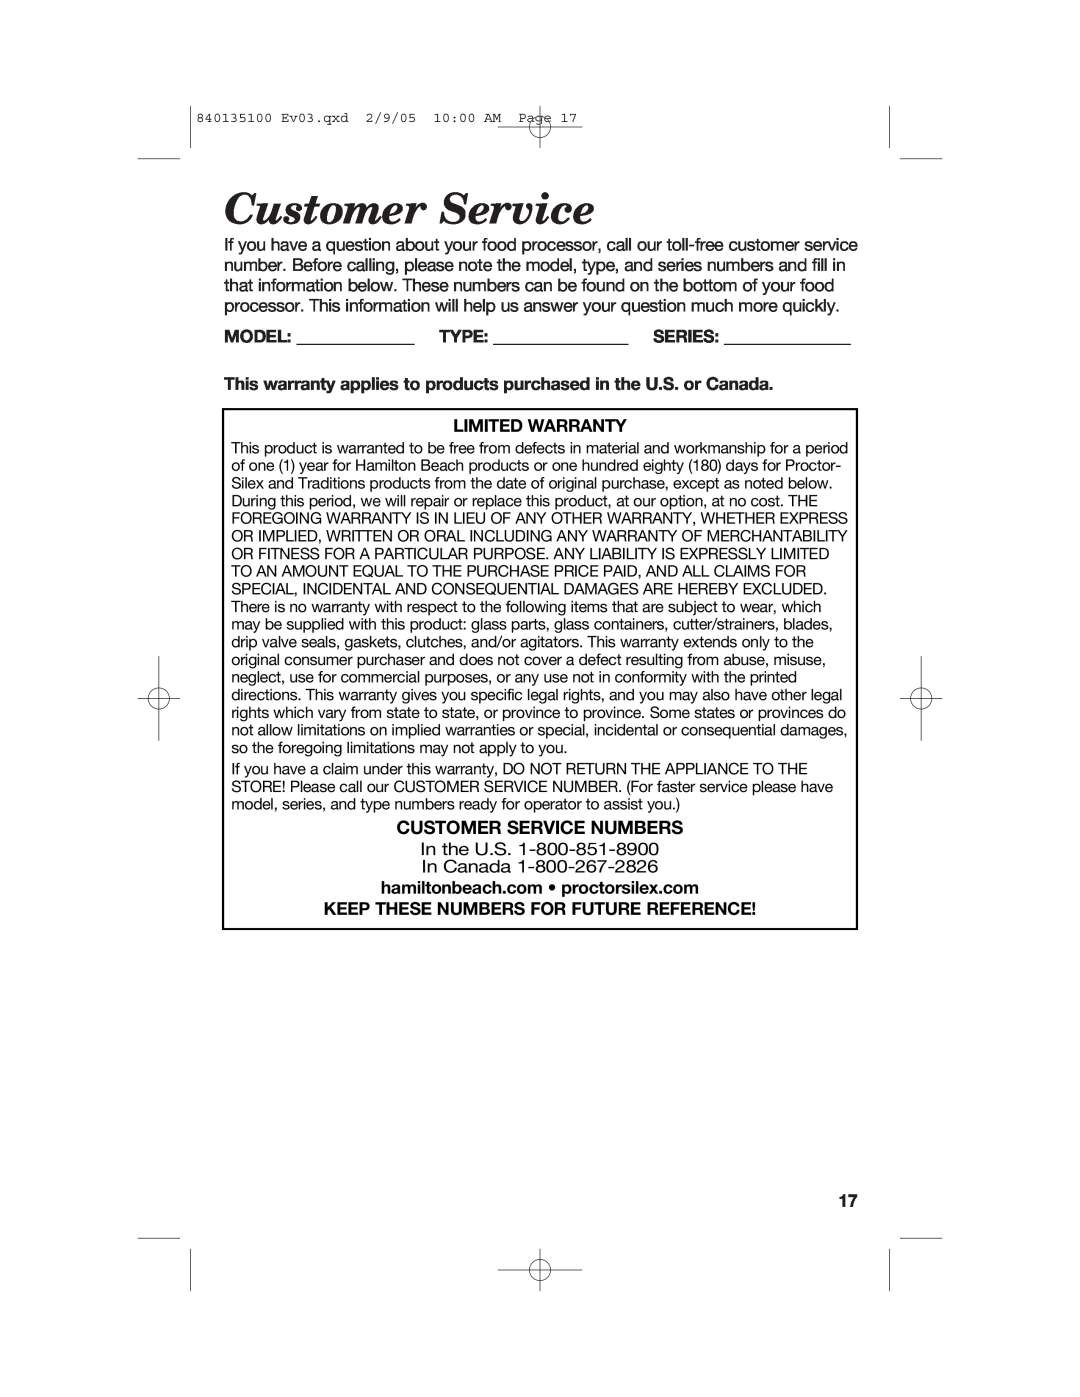 Hamilton Beach 840135100 manual Customer Service Numbers, Model Type Series, Limited Warranty 